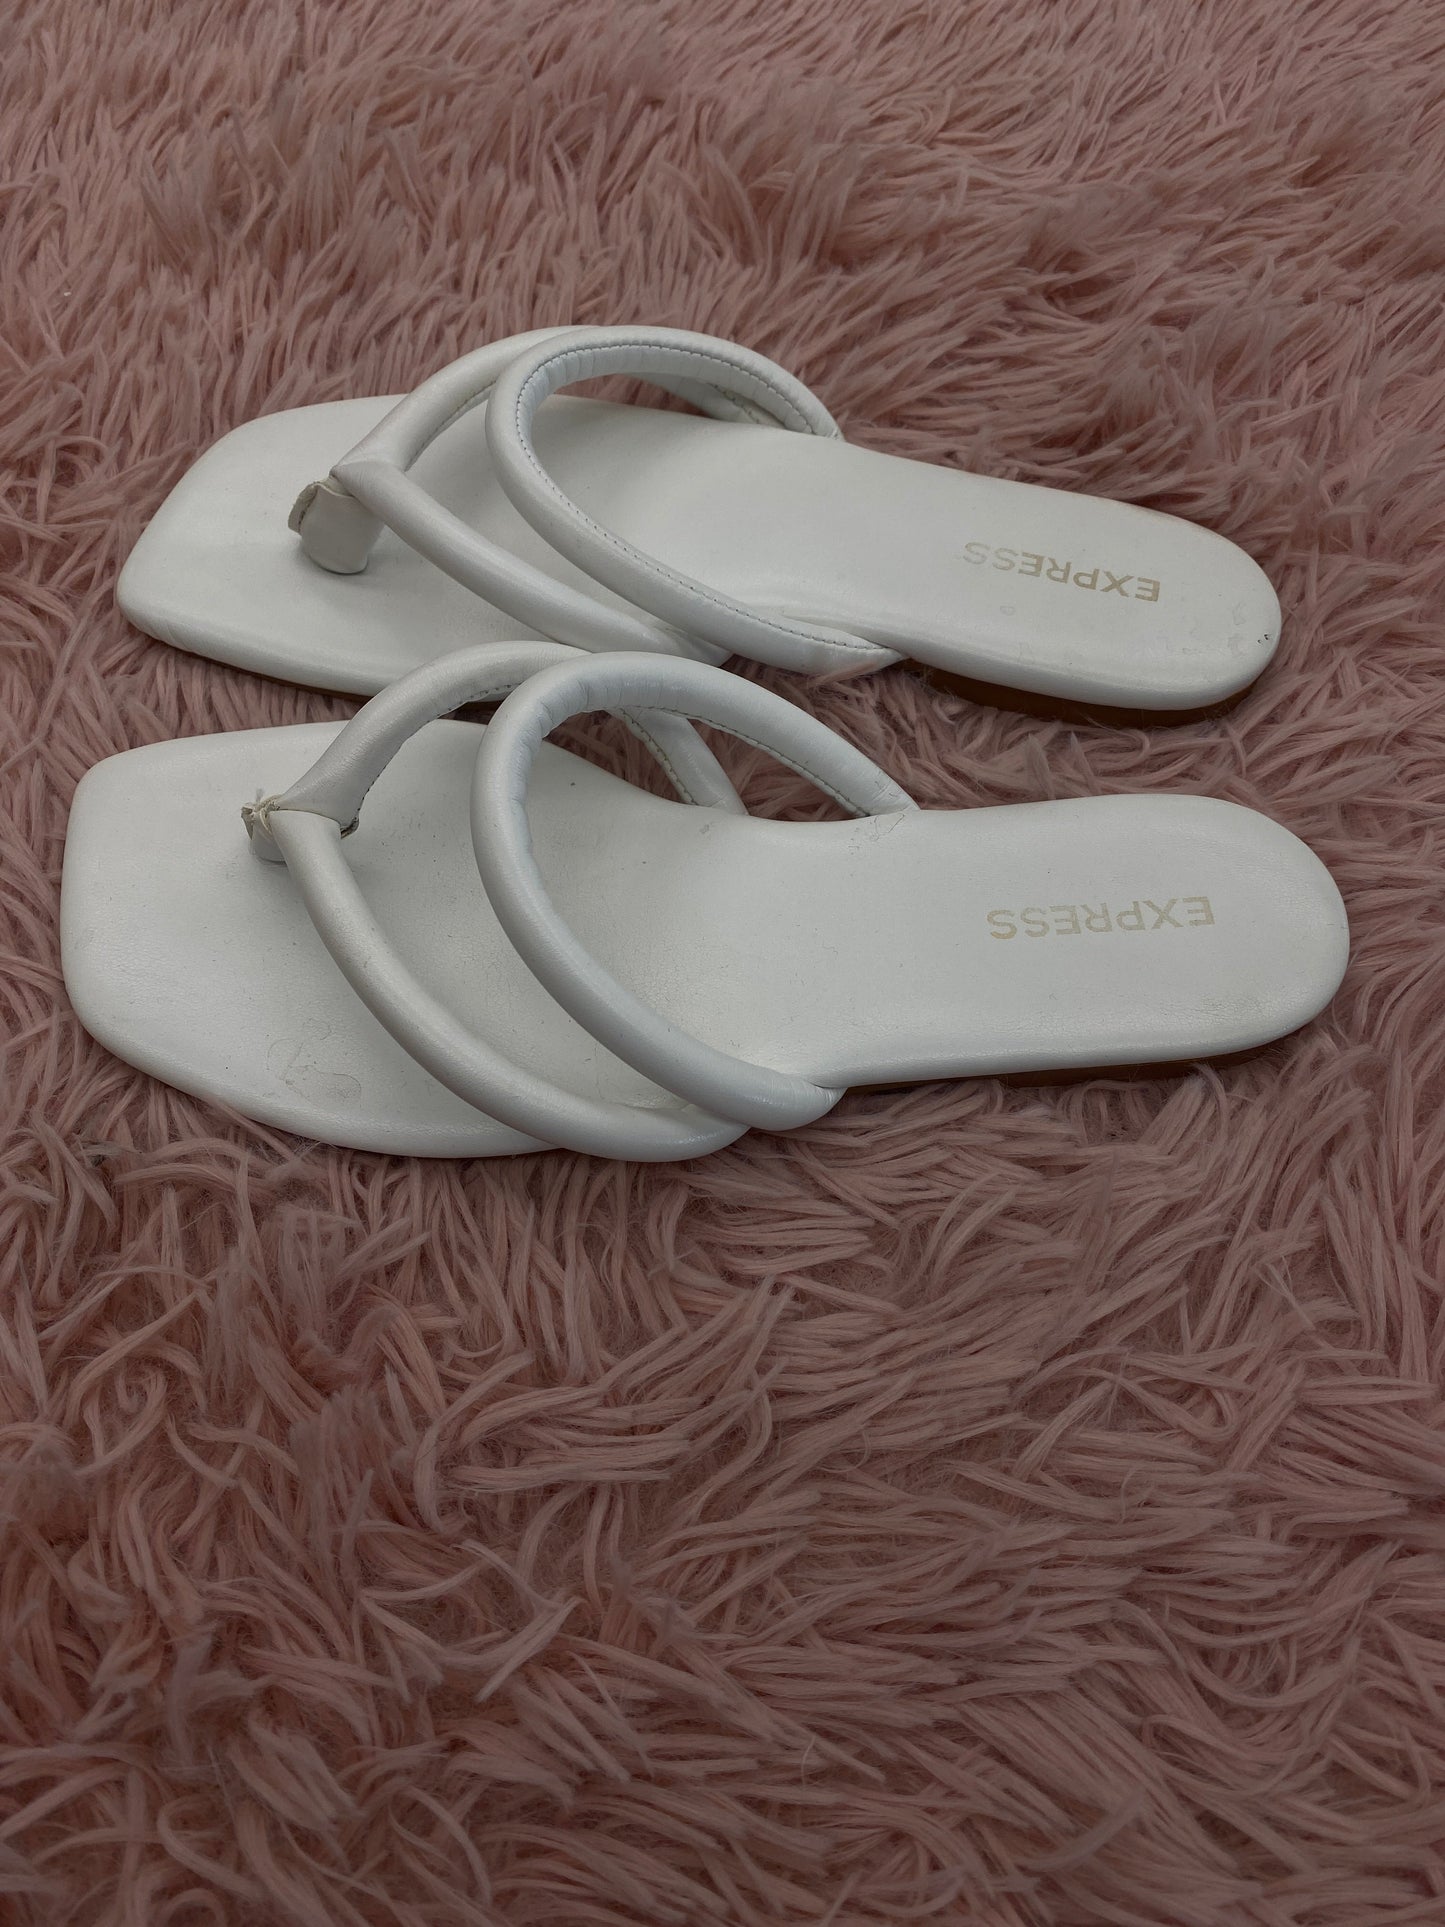 White Sandals Flip Flops Express, Size 6